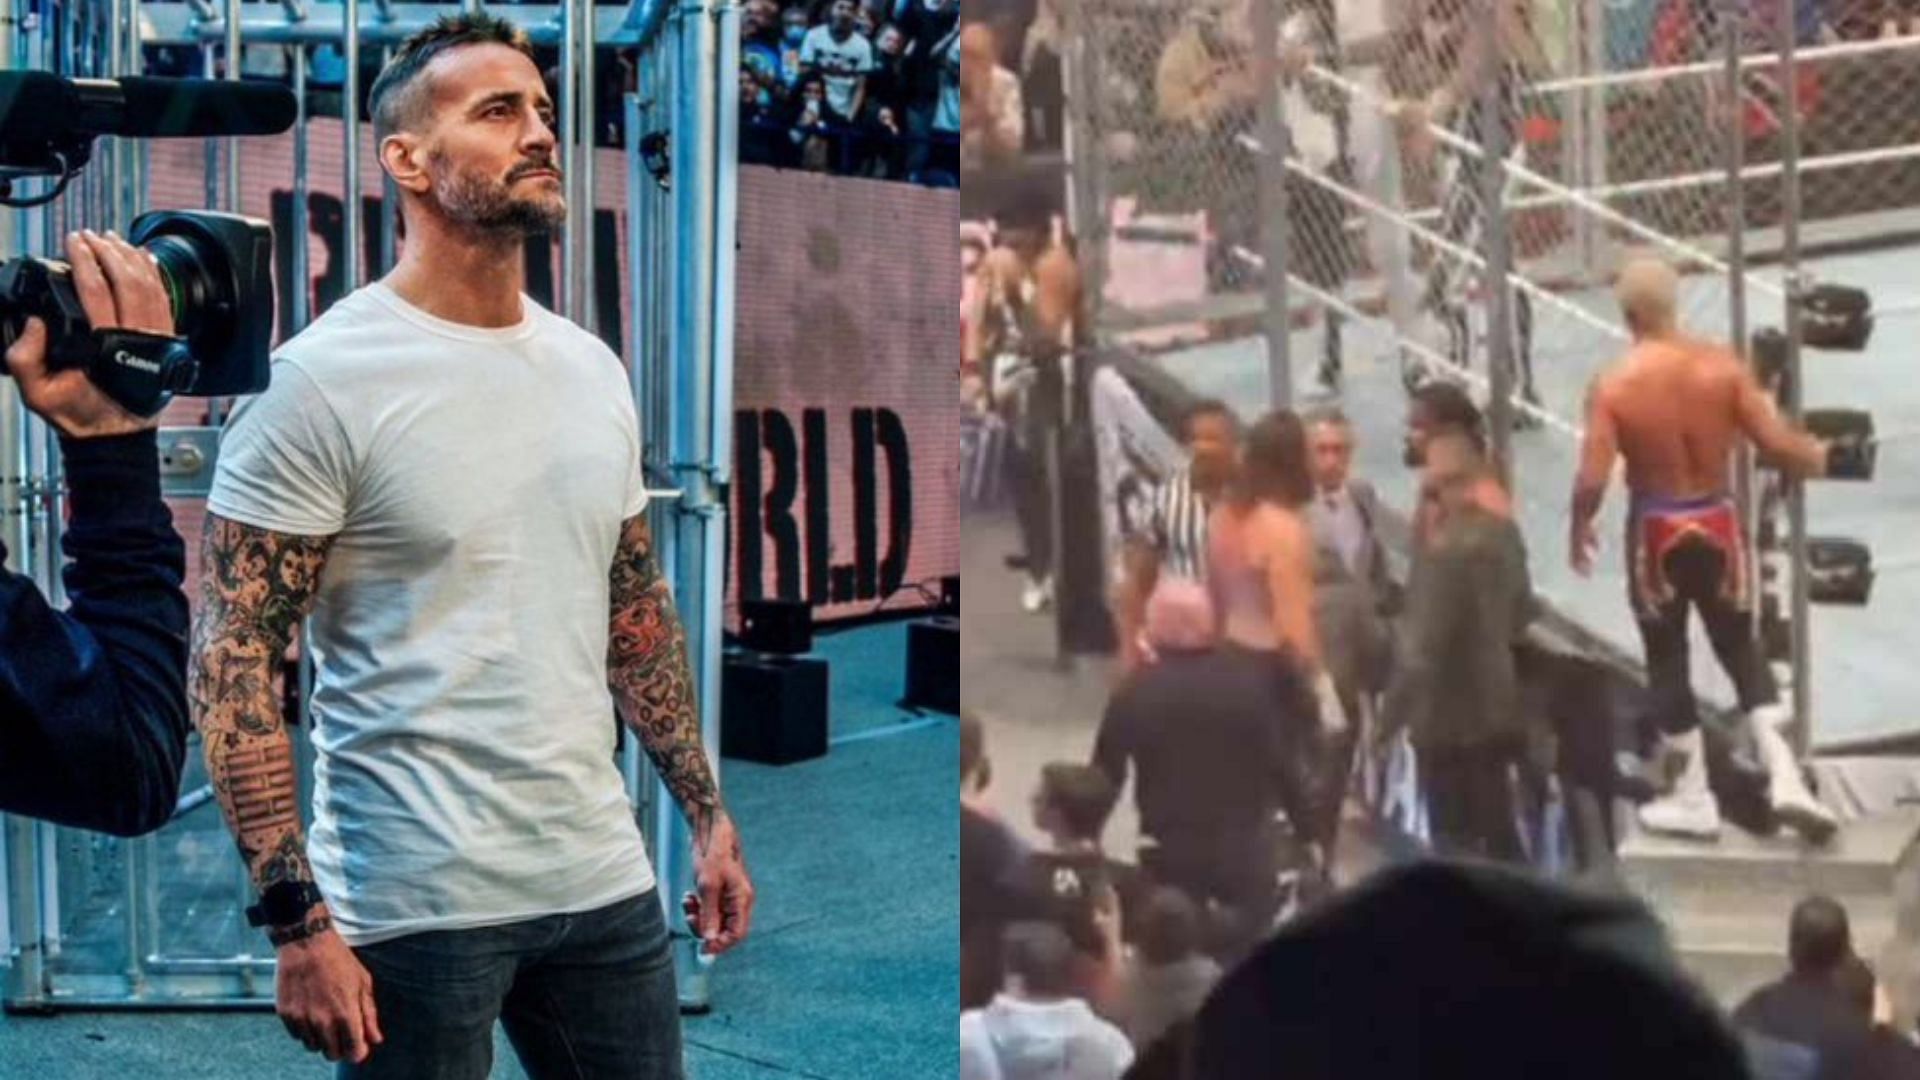 CM Punk made his surprise return to WWE at Survivor Series